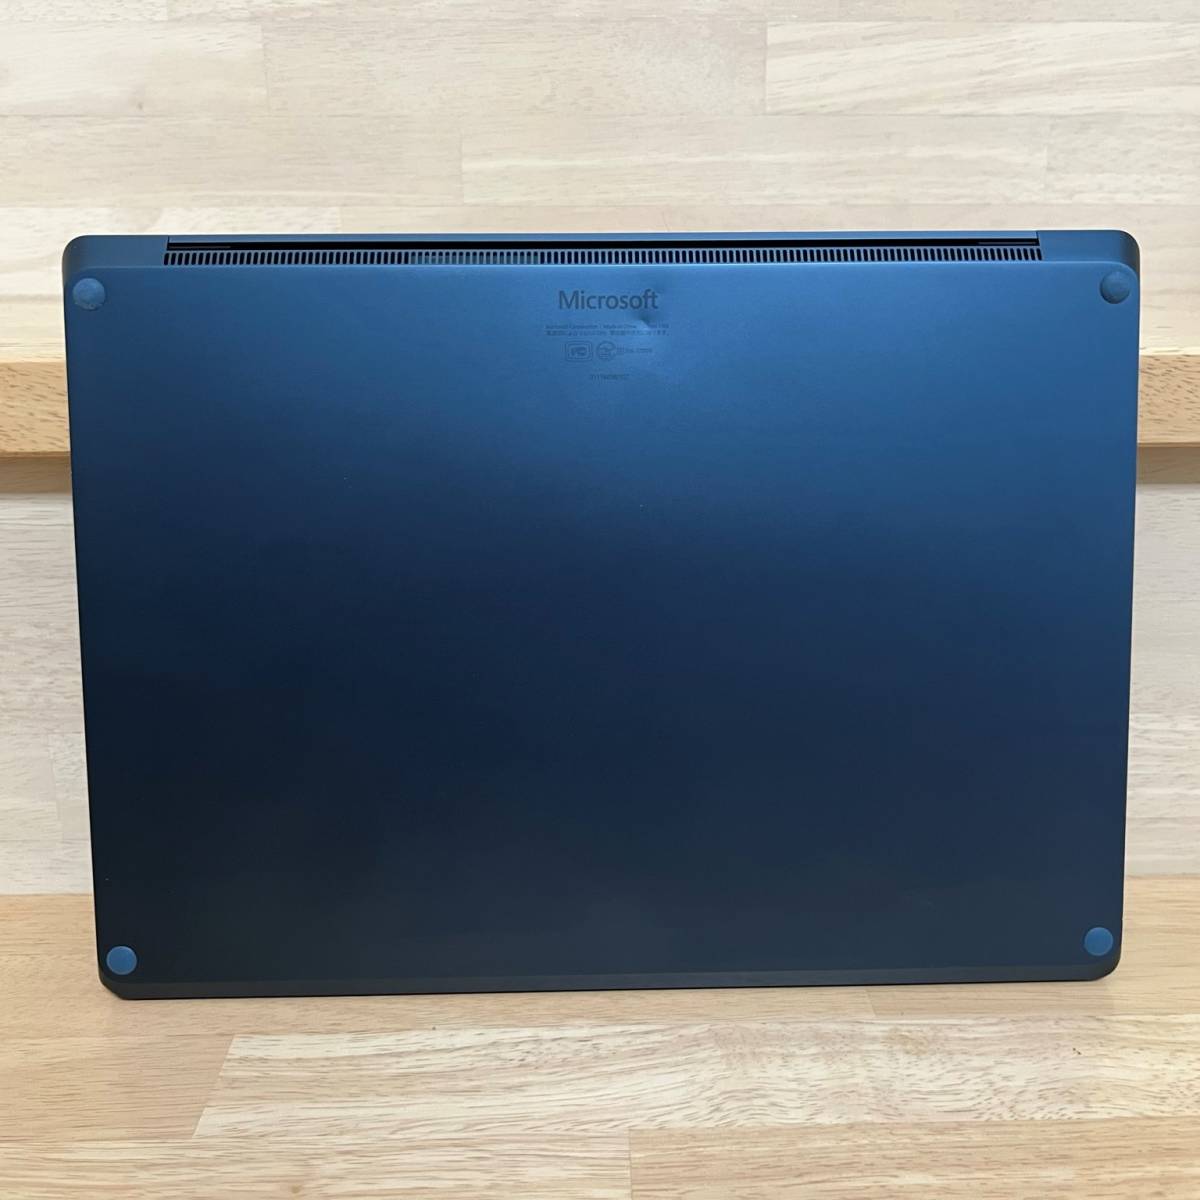 Microsoft Surface Laptop кобальт голубой CPU no. 7 поколение Intel Core i5 SSD 256 GB память 8GB OS Windows10 PRO office2016